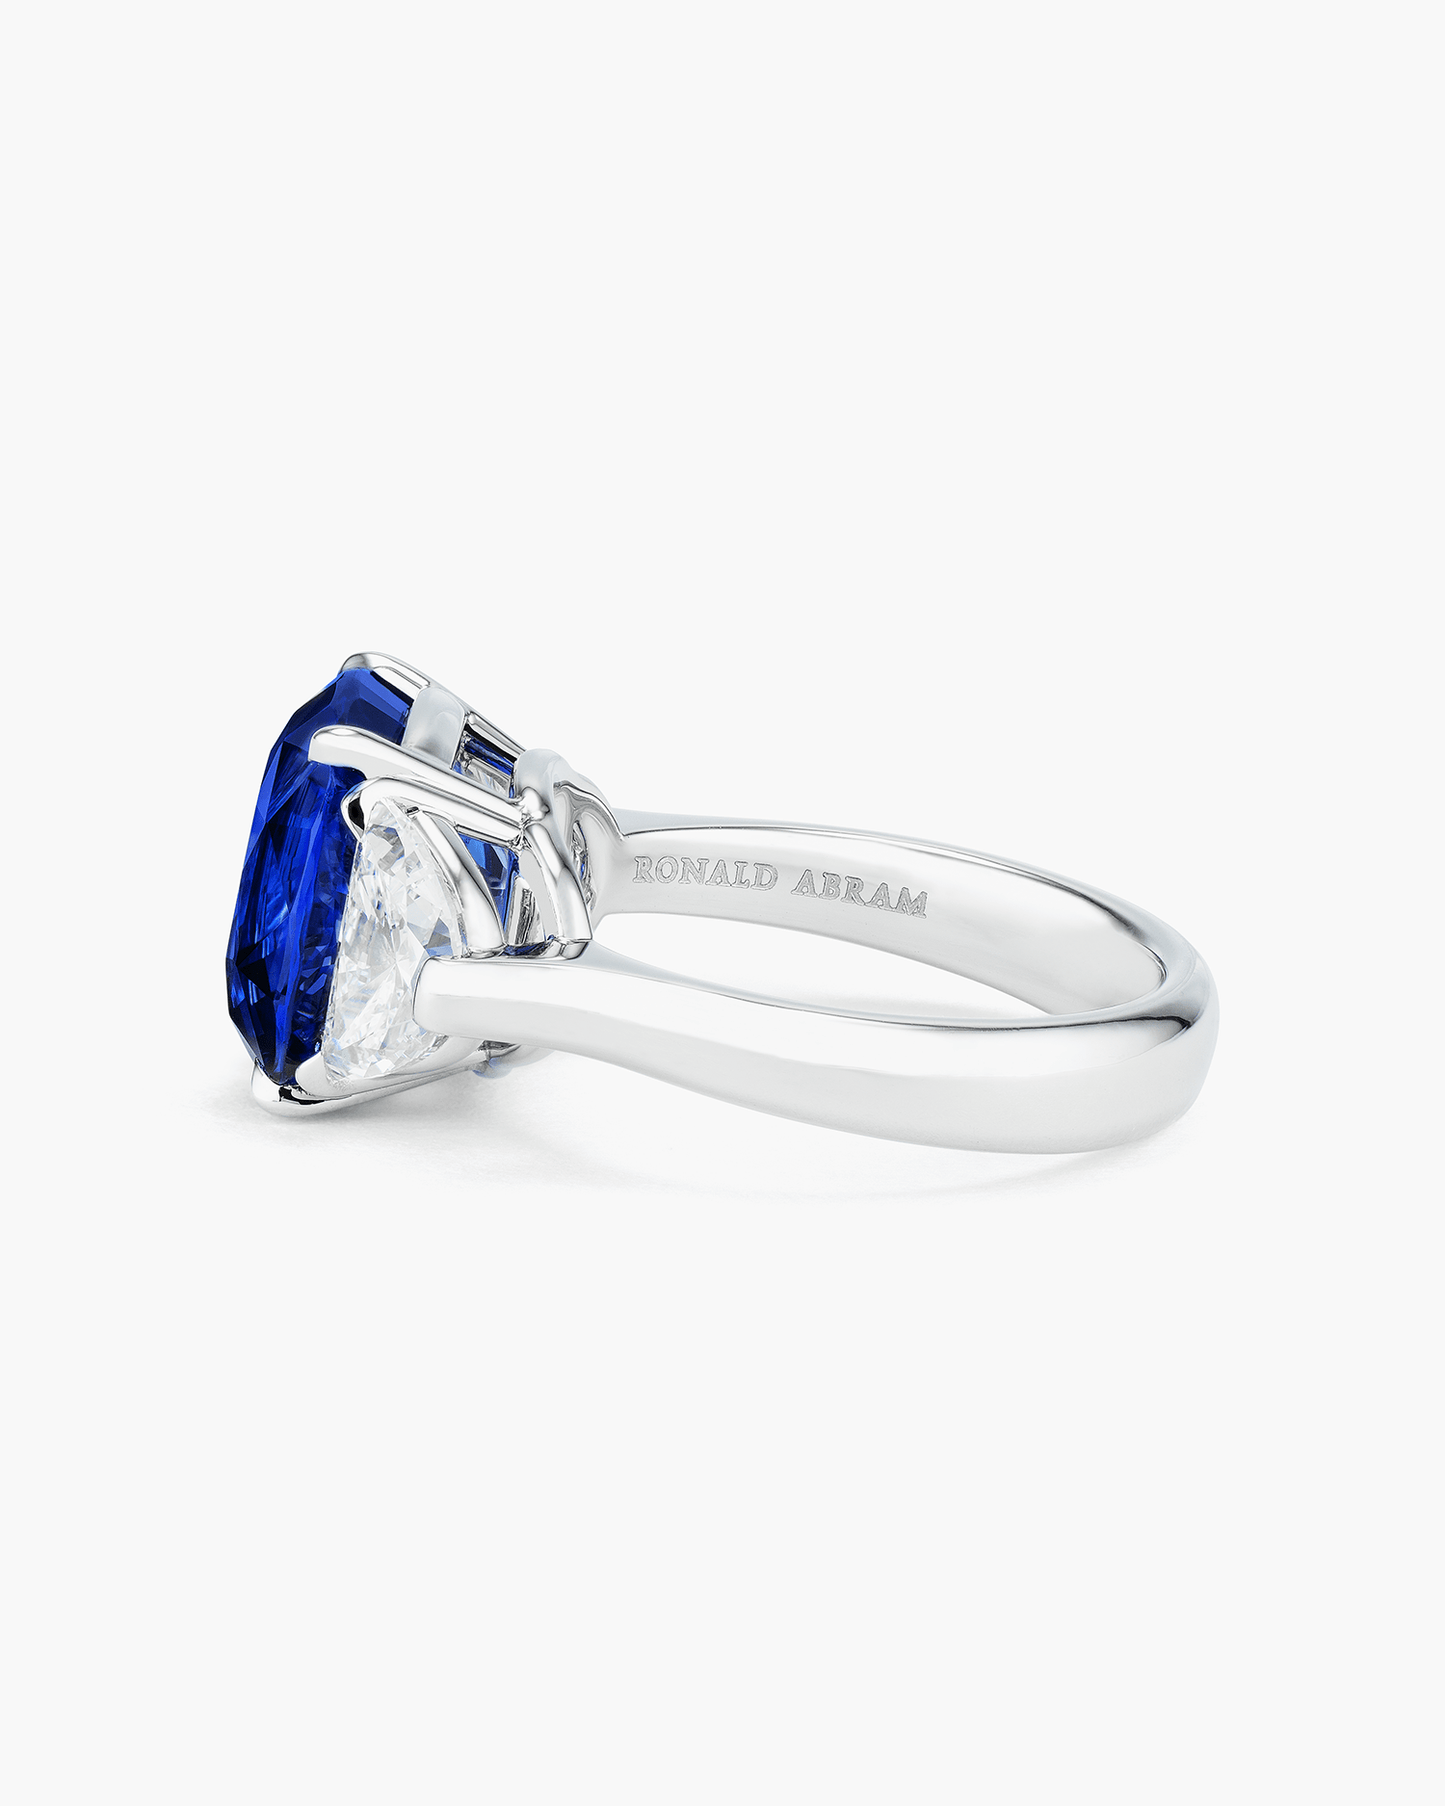 7.54 carat Cushion Cut Ceylon Sapphire and Diamond Ring